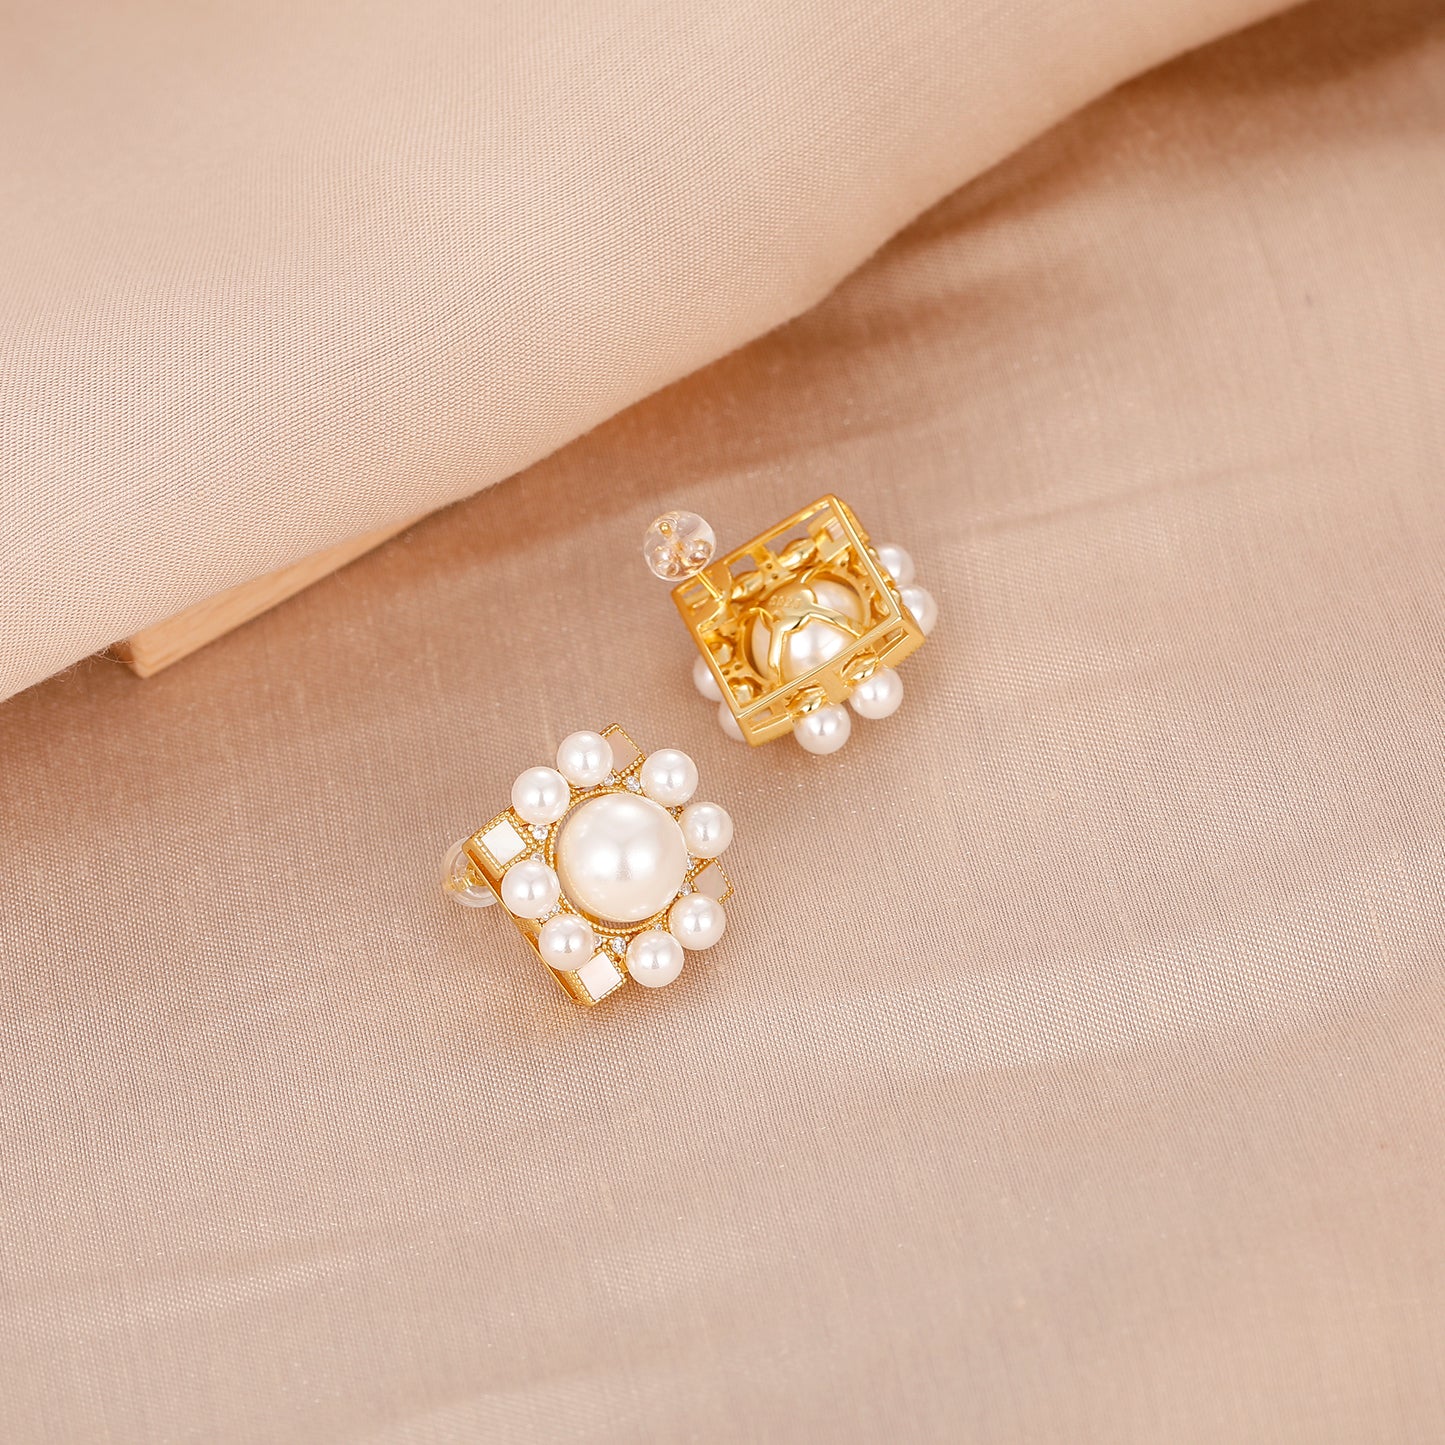 Natural Shell Pearl 10mm Studs Earrings, Sterling Silver Earrings, Beach Jewelry, Simulated Diamond Earrings For Women